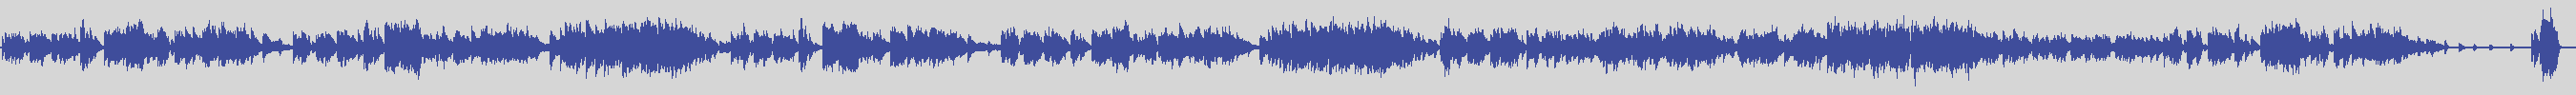 big_music_classic [BMC002] Frédéric Chopin, C Red - Mazurka Op.33 N.4 [] audio wave form